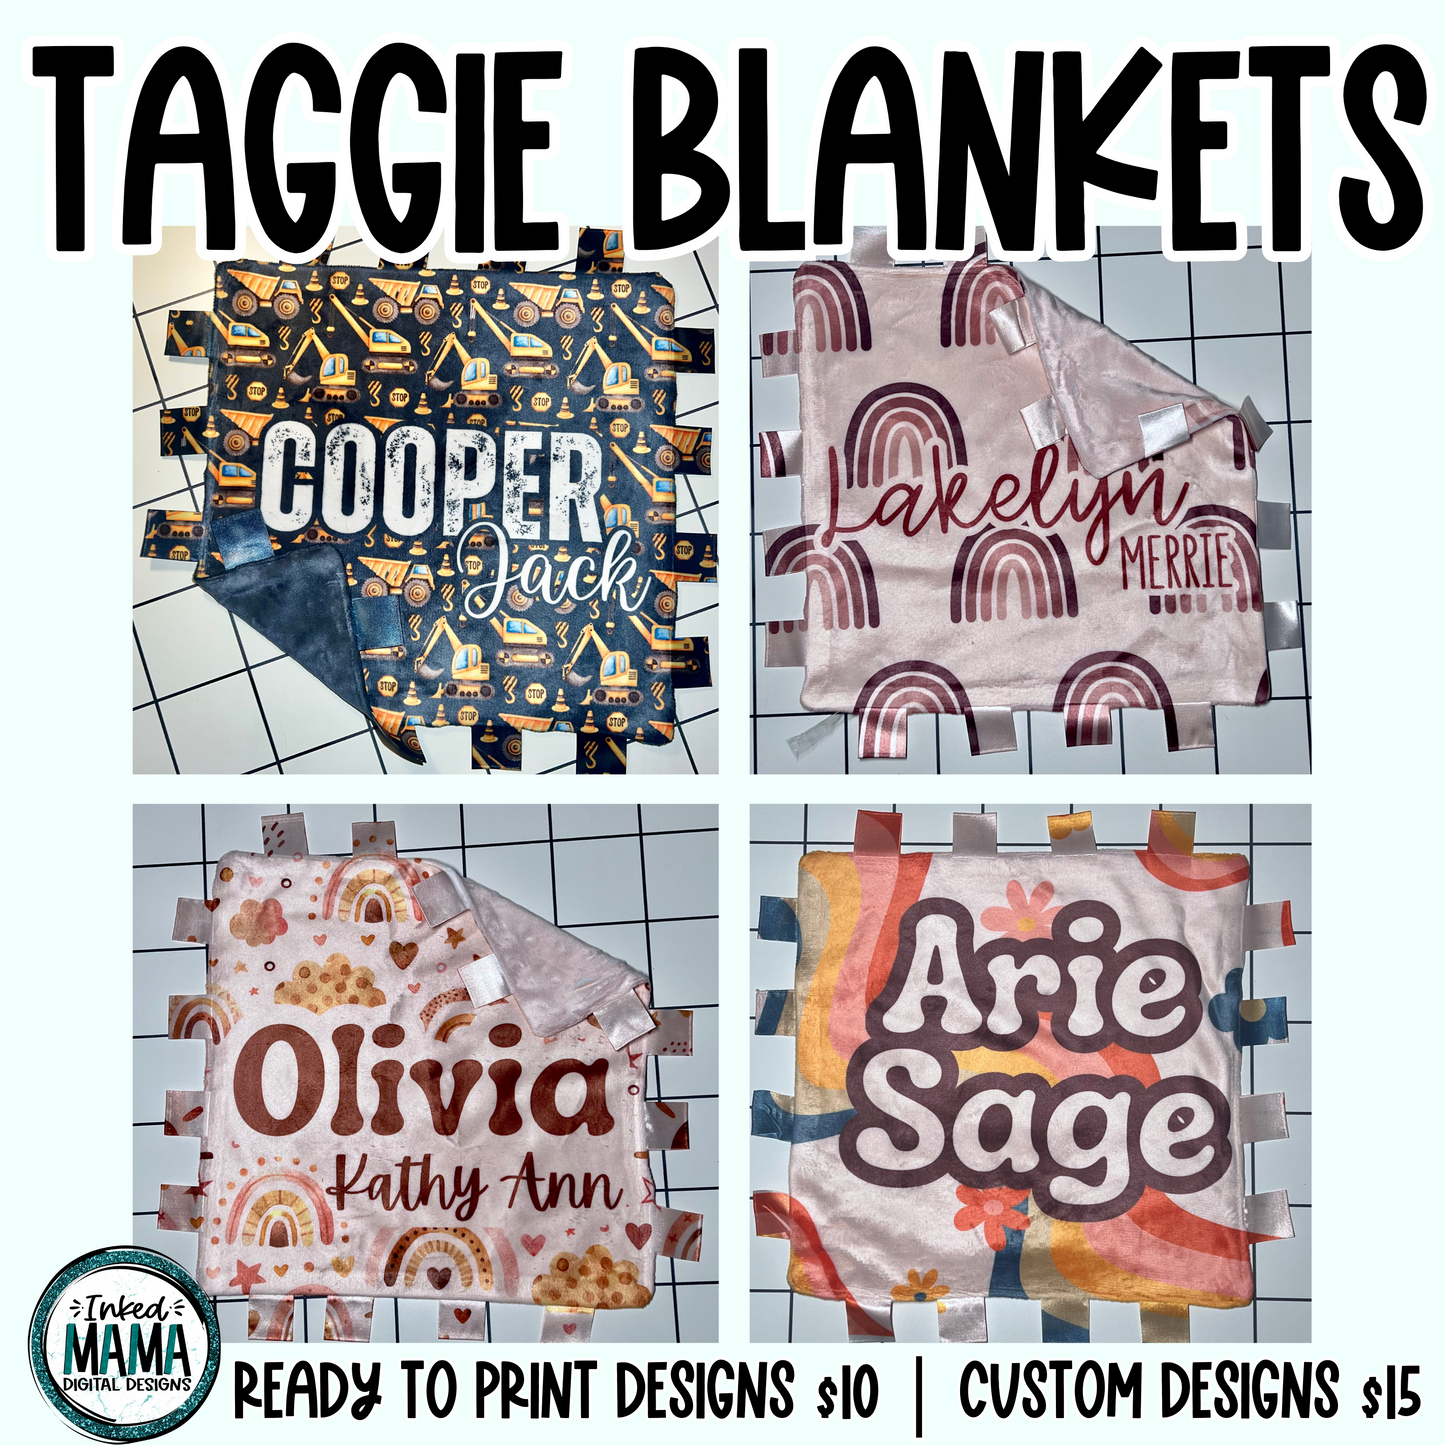 Taggie Blankets